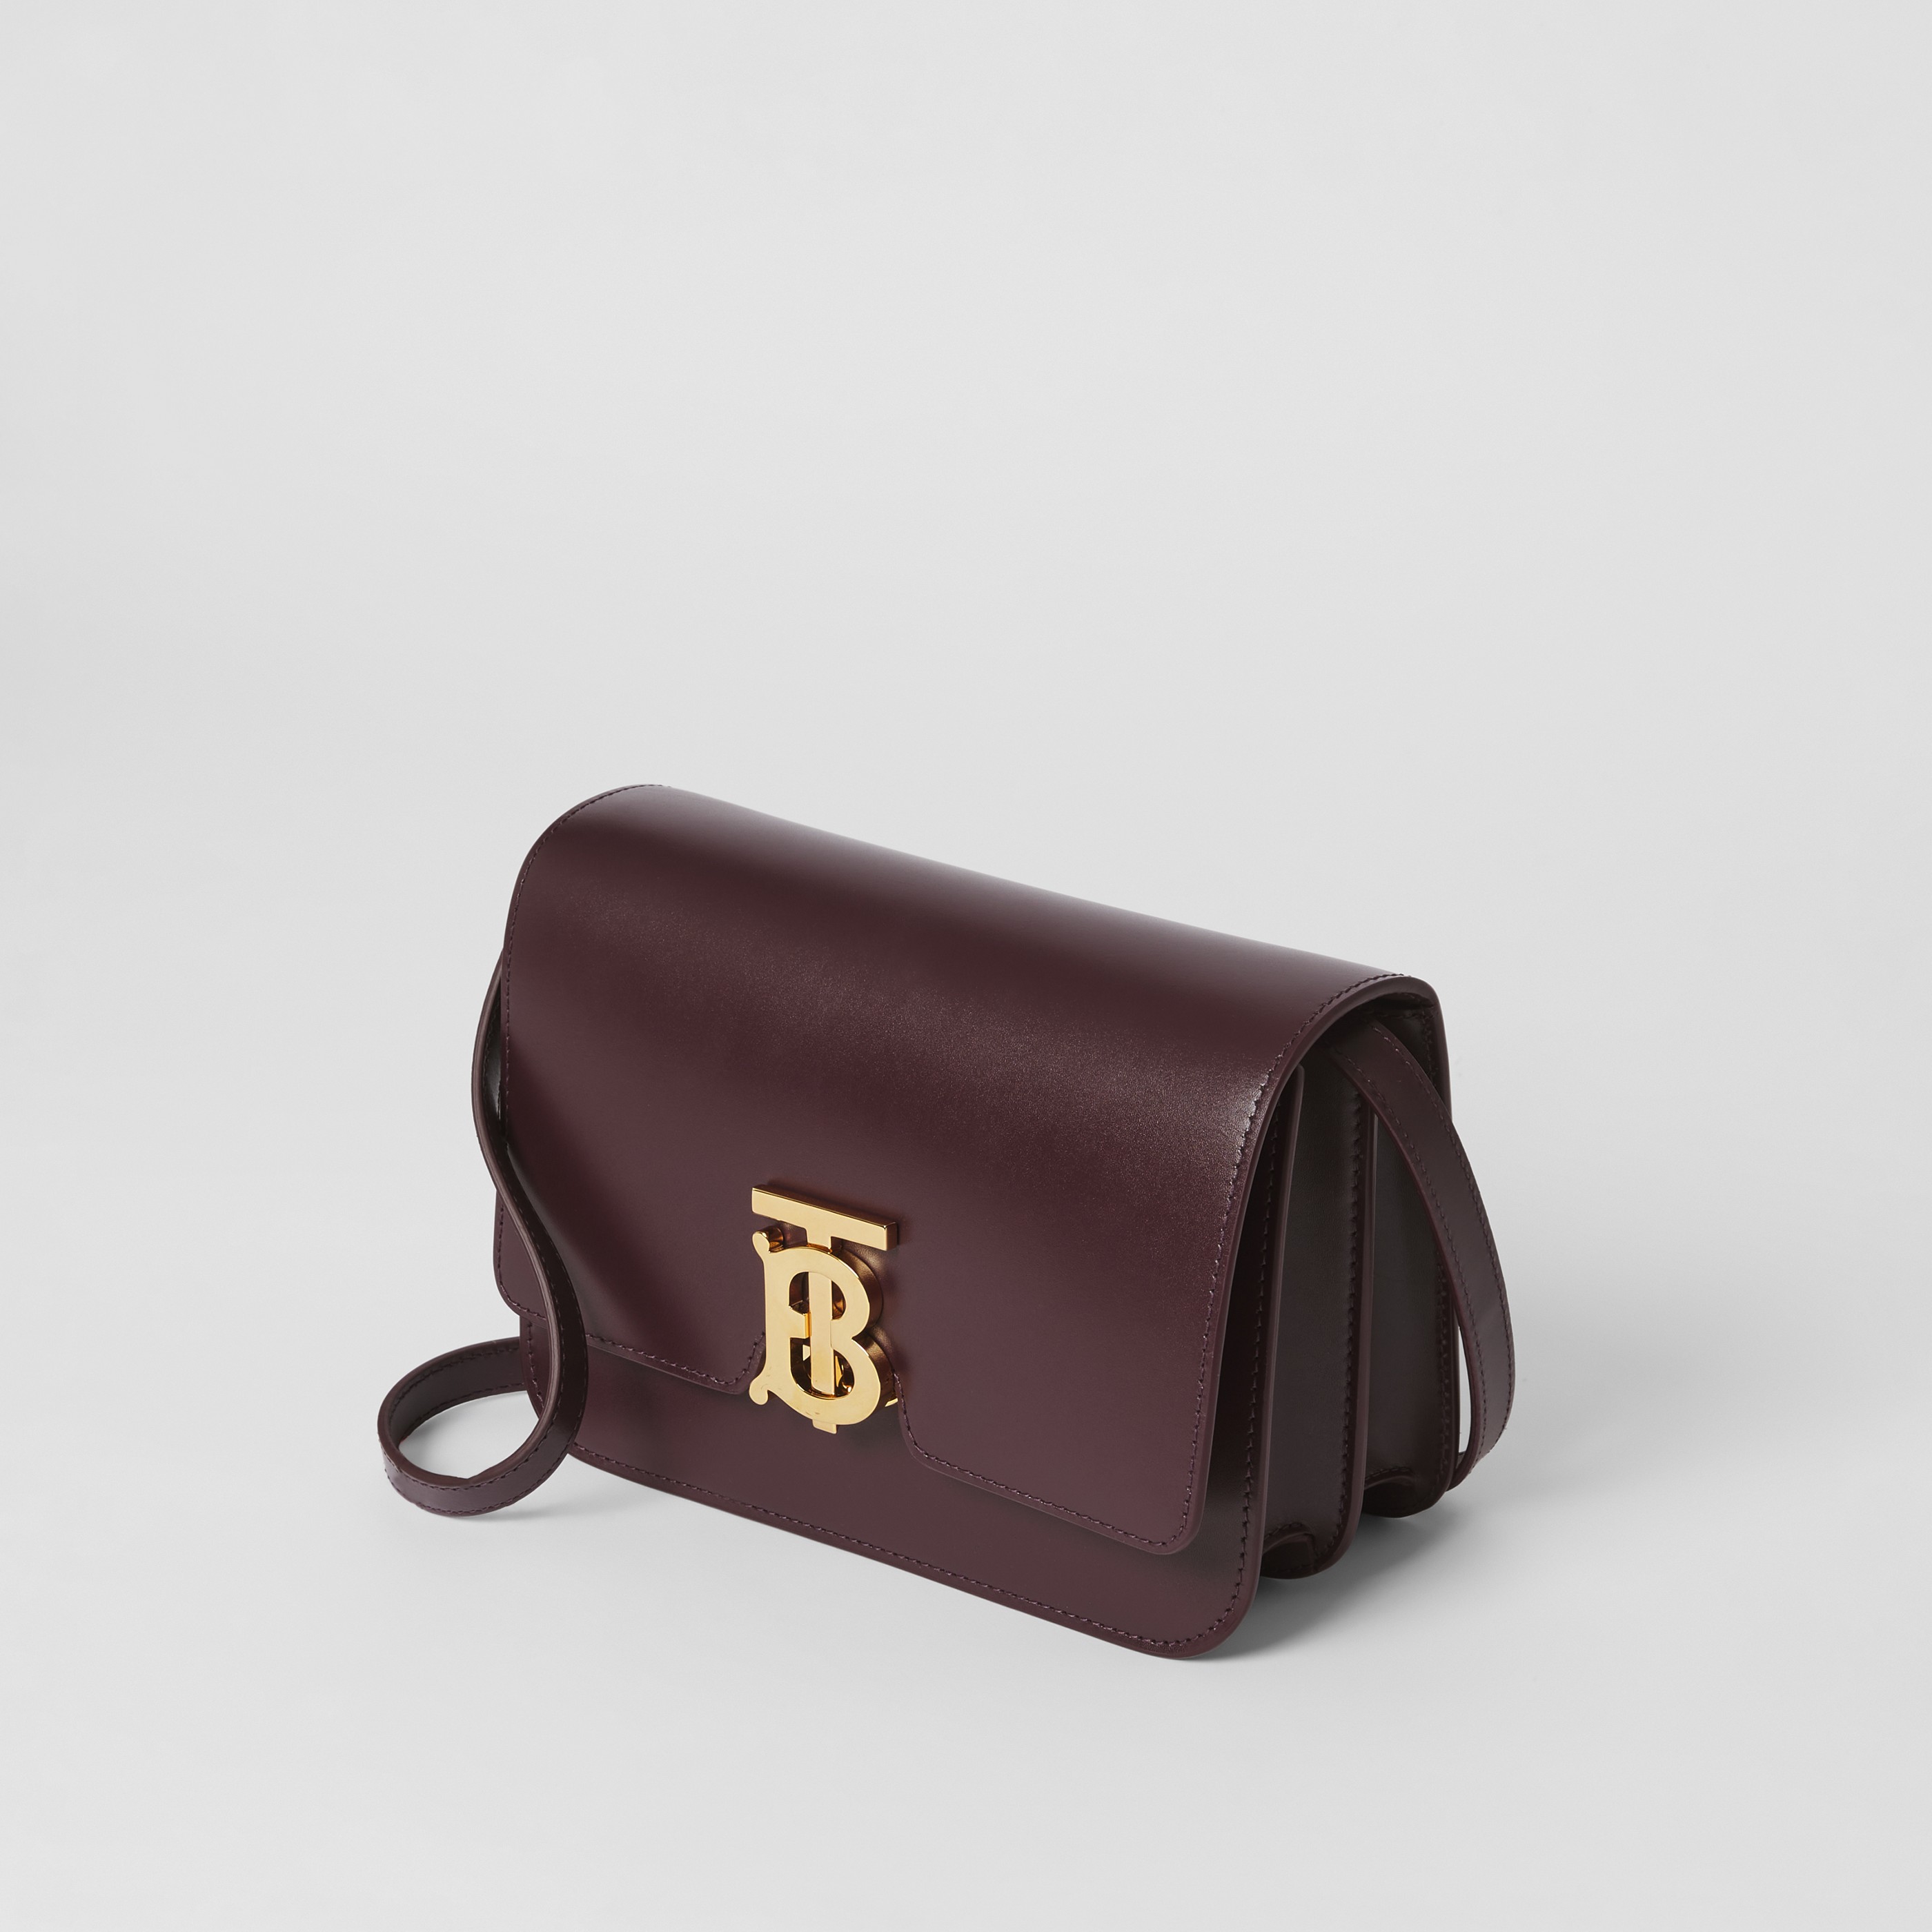 Burberry Small Leather TB Bag - Deep Maroon